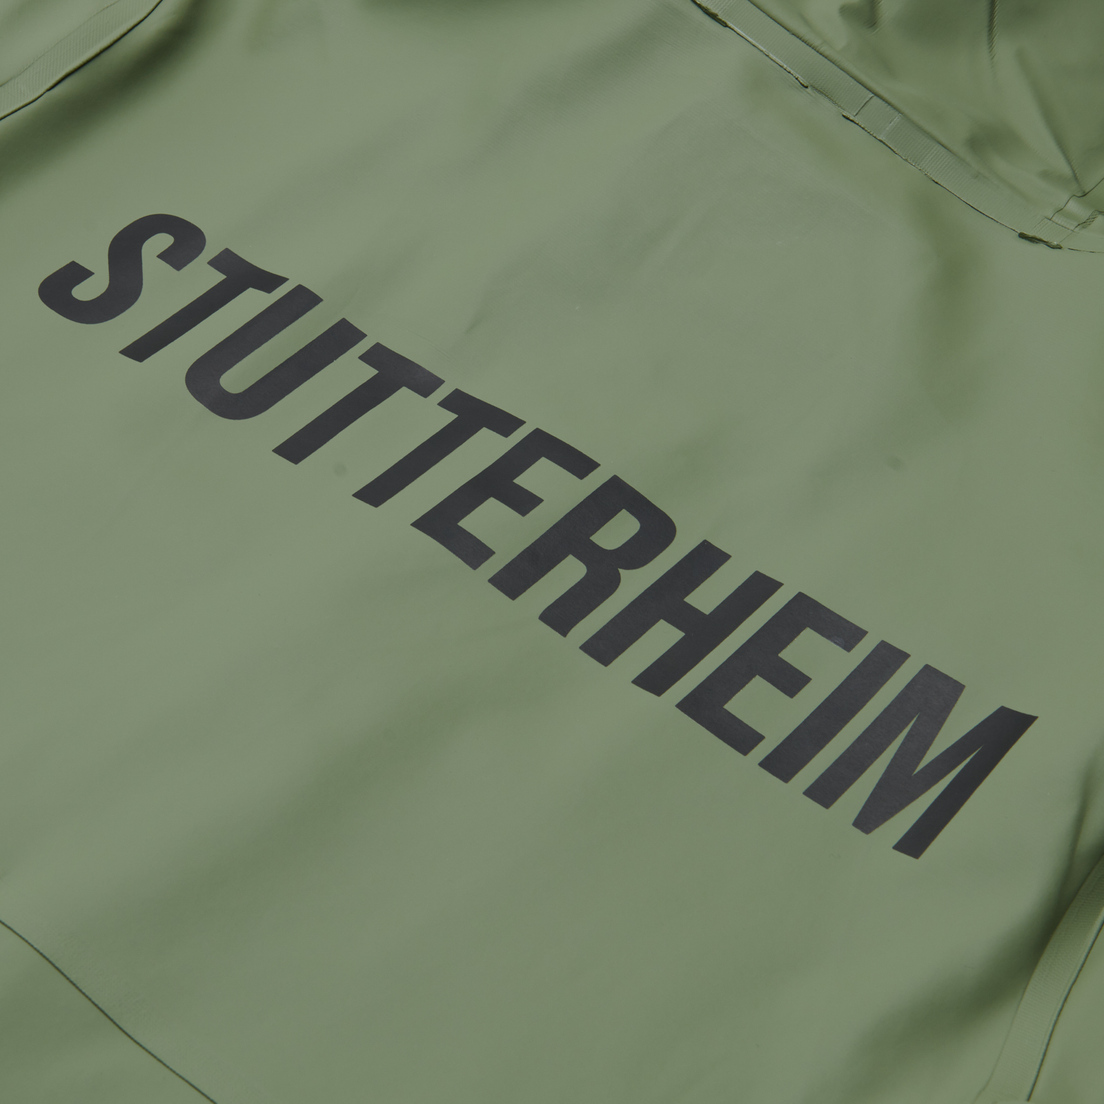 Stutterheim Мужская куртка дождевик Stockholm Long Print